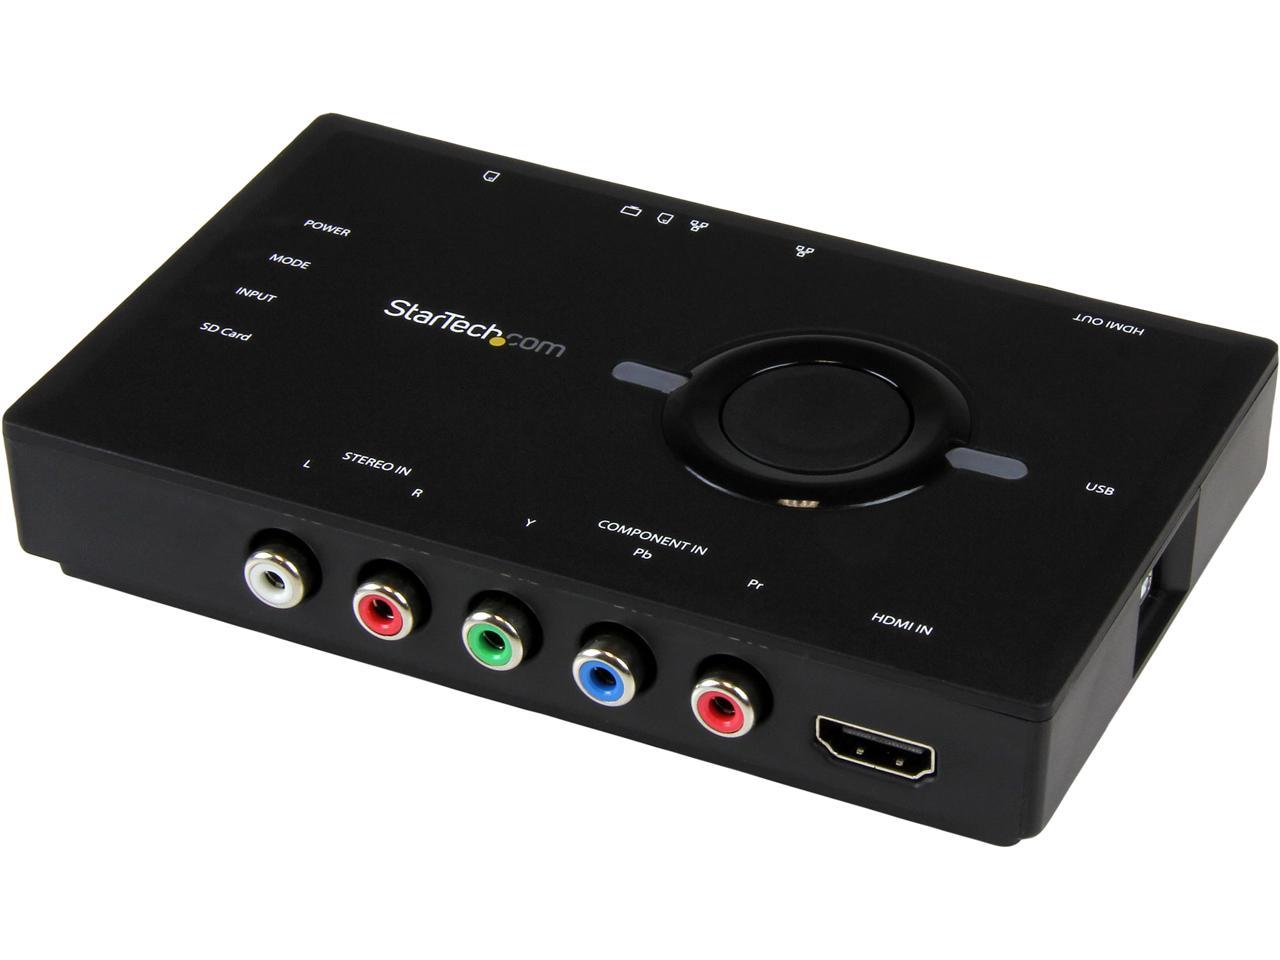 StarTech USB2HDCAPS USB Video Capture Card - Standalone - 1080p Game Capture Card - USB Video Capture Card - HDMI Capture Card